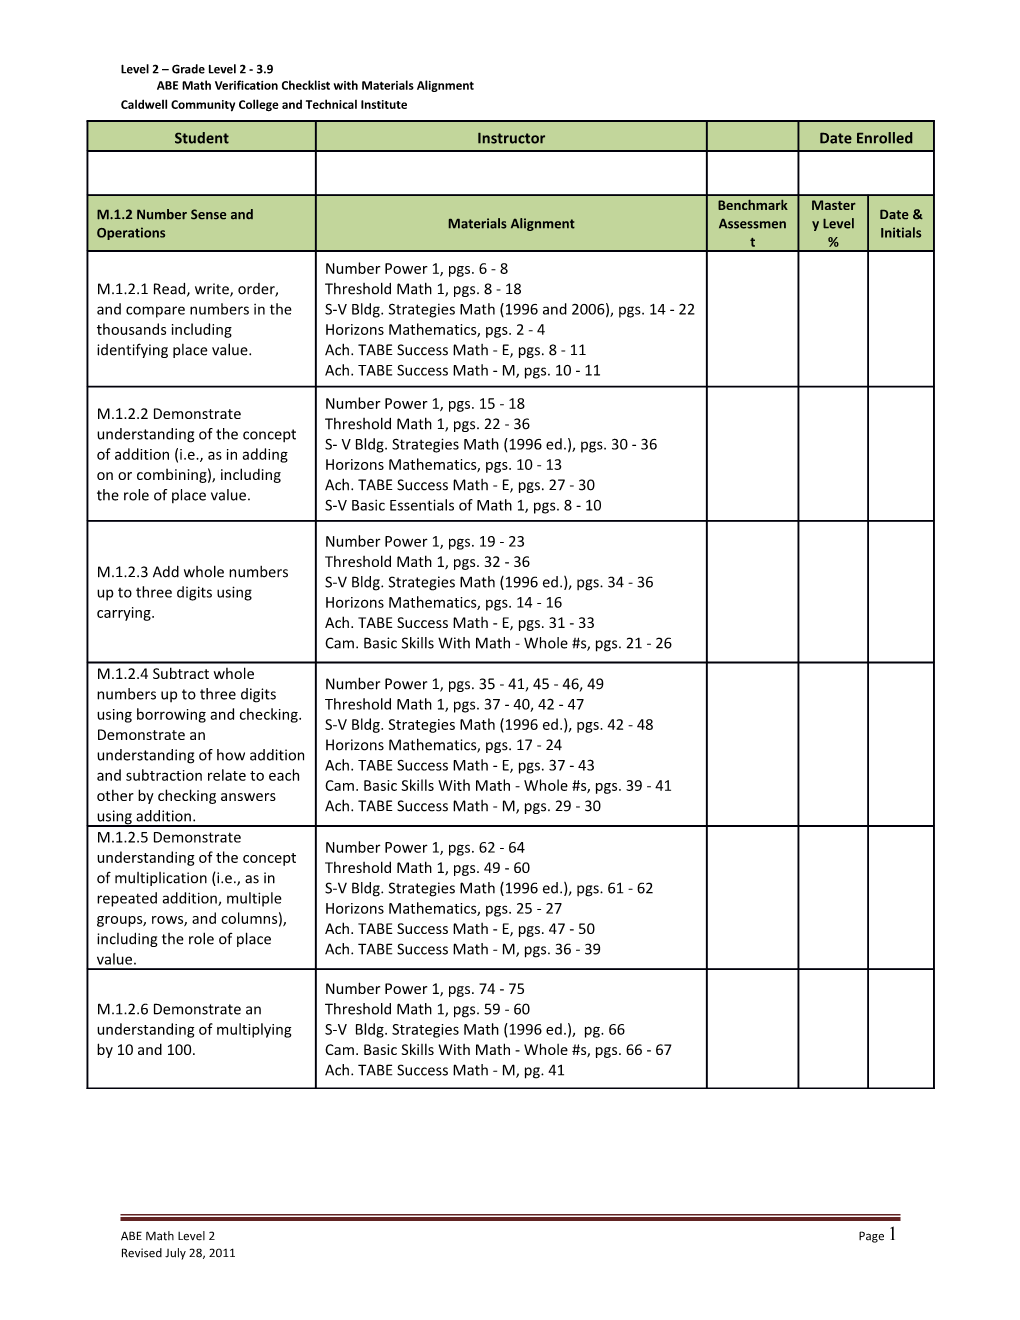 Level 2 Grade Level 2 - 3.9ABE Math Verification Checklist with Materials Alignment